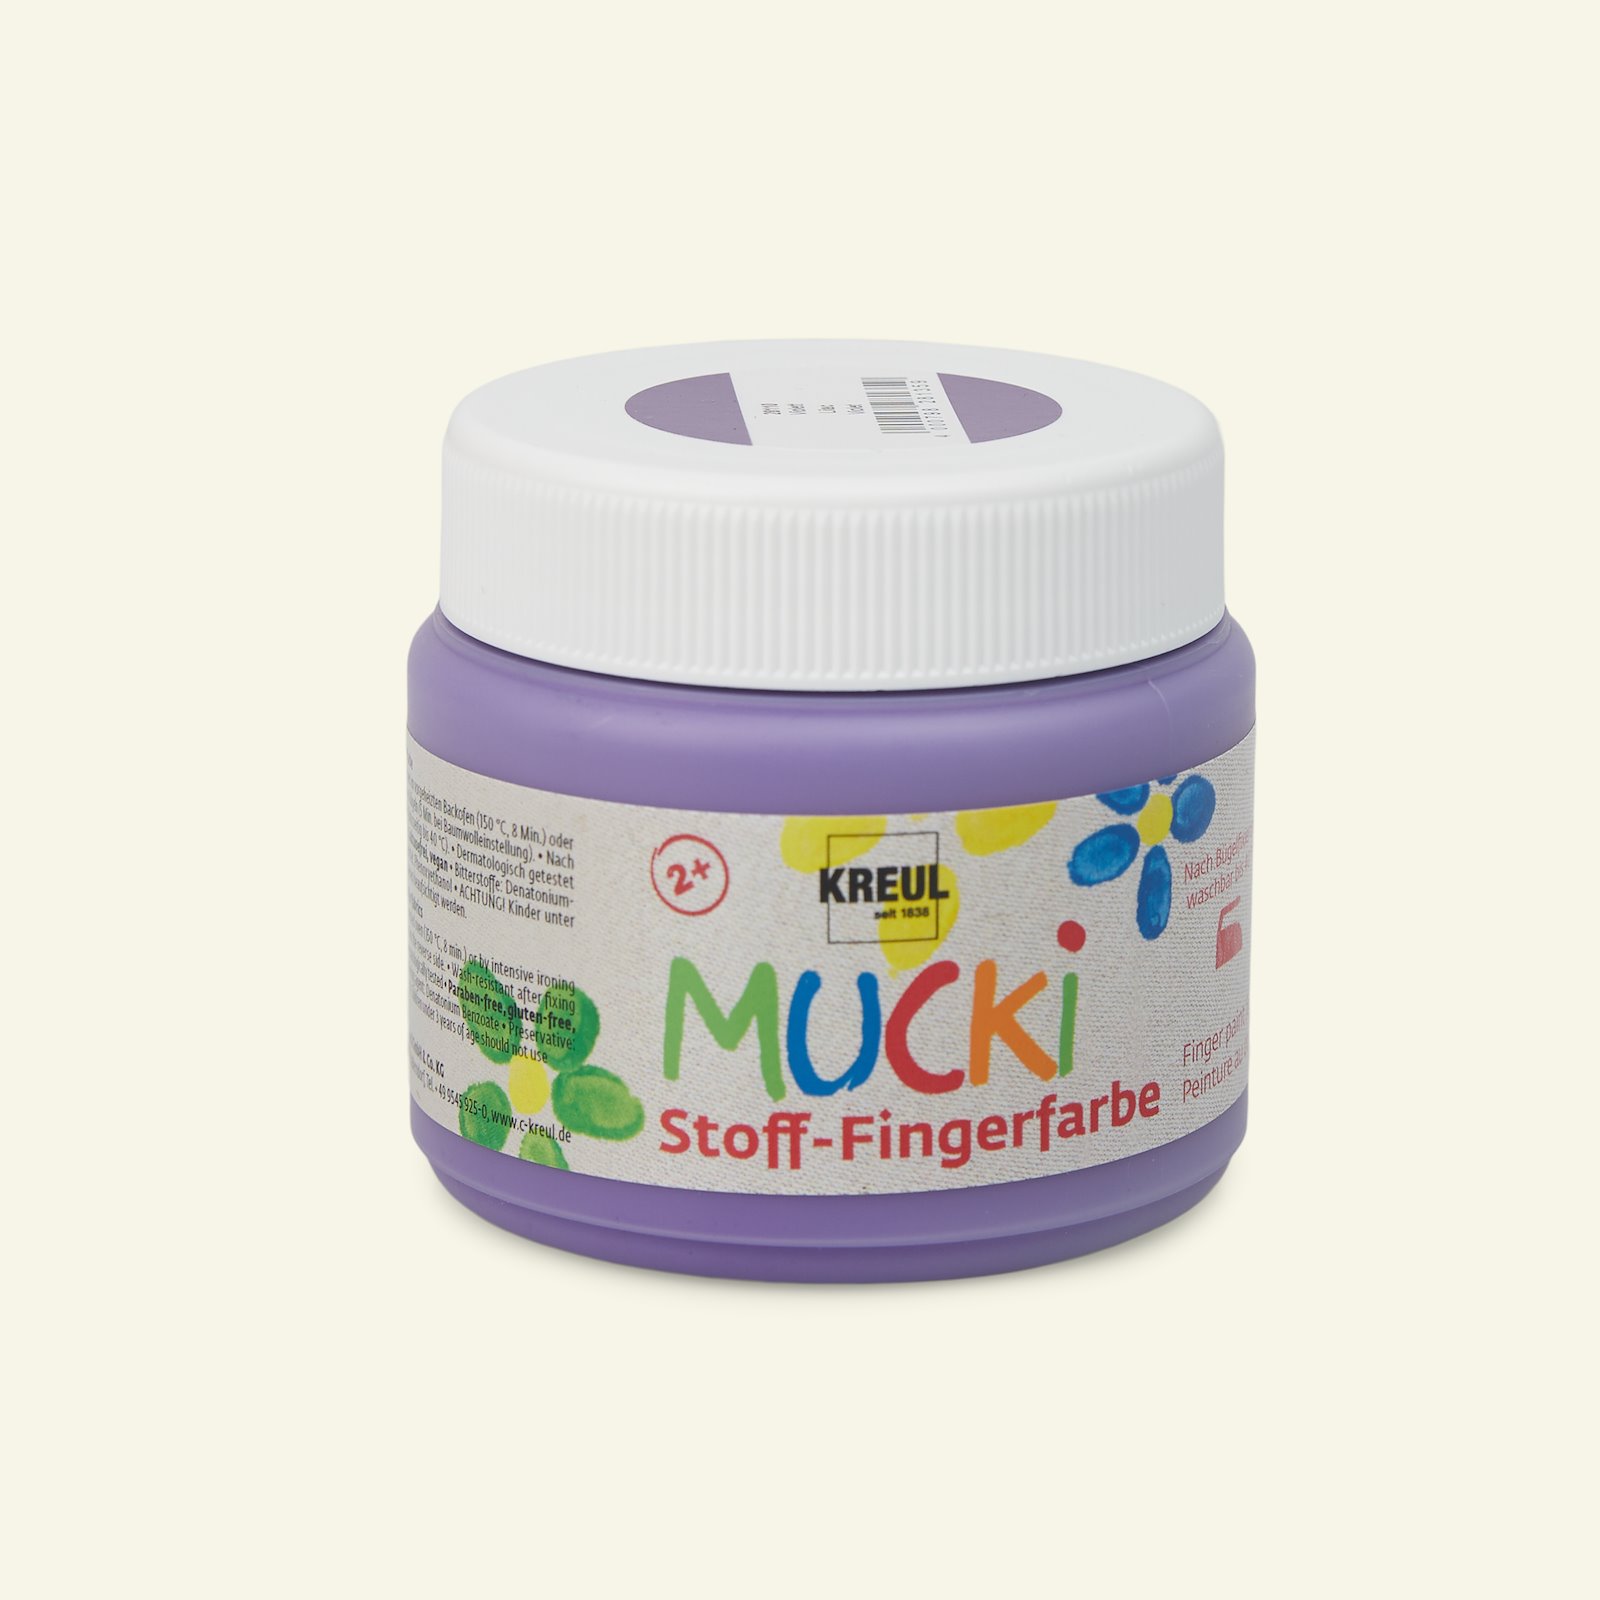 Mucki fabrics finger paint, purple 150ml 29690_pack_b